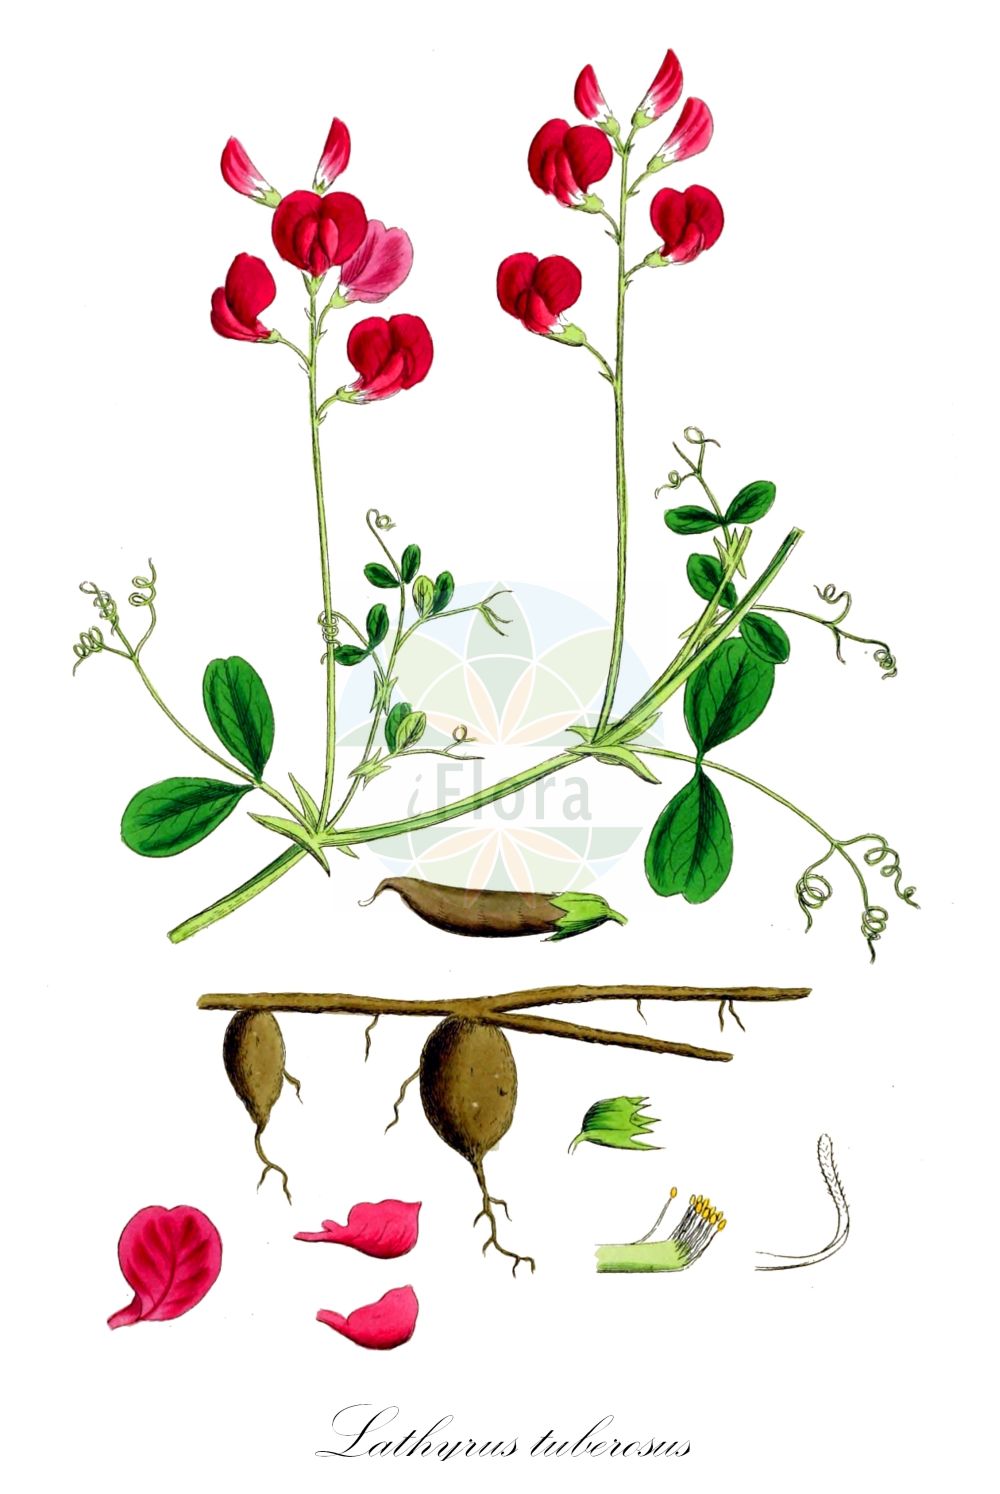 Historische Abbildung von Lathyrus tuberosus (Knollen-Platterbse - Tuberous Pea). Das Bild zeigt Blatt, Bluete, Frucht und Same. ---- Historical Drawing of Lathyrus tuberosus (Knollen-Platterbse - Tuberous Pea). The image is showing leaf, flower, fruit and seed.(Lathyrus tuberosus,Knollen-Platterbse,Tuberous Pea,Lathyrus tuberosus,Knollen-Platterbse,Tuberous Pea,Earth Chestnut,Tuberous Sweetpea,Earthnut Pea,Tuberous Vetchling,Lathyrus,Platterbse,Pea,Fabaceae,Schmetterlingsblütler,Pea family,Blatt,Bluete,Frucht,Same,leaf,flower,fruit,seed,Sowerby (1790-1813))